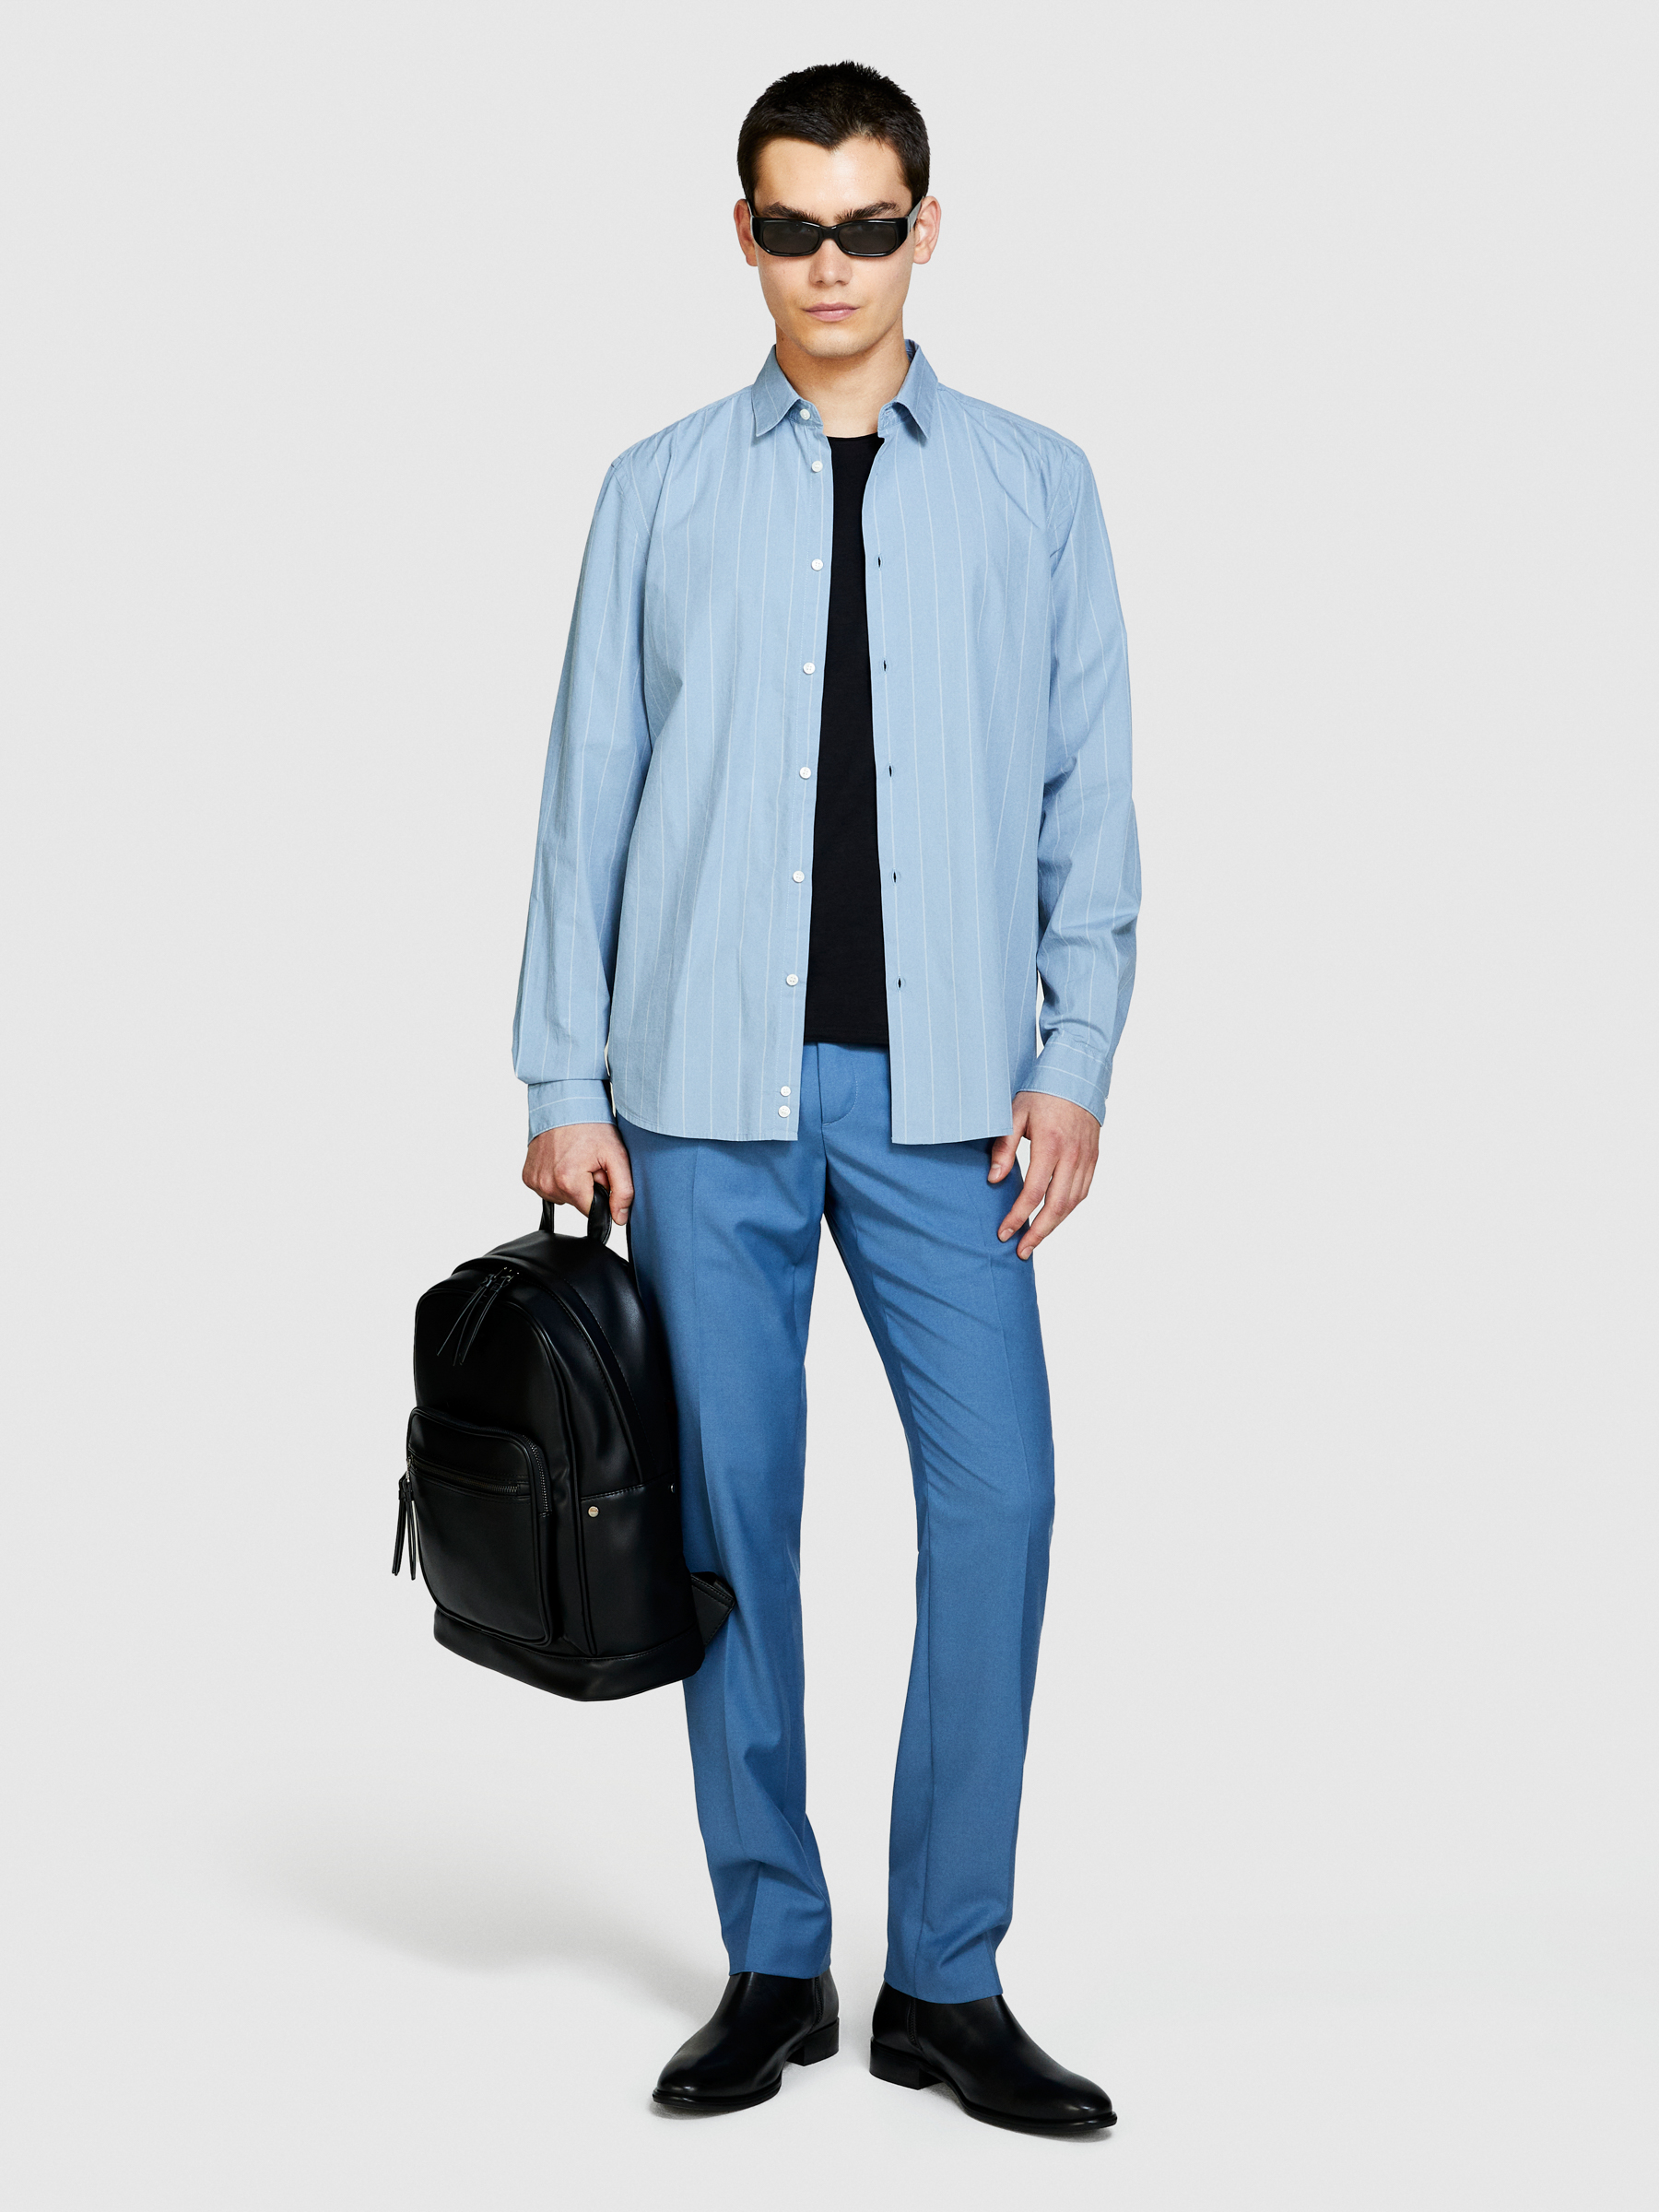 Sisley - Striped Shirt, Man, Light Blue, Size: 44